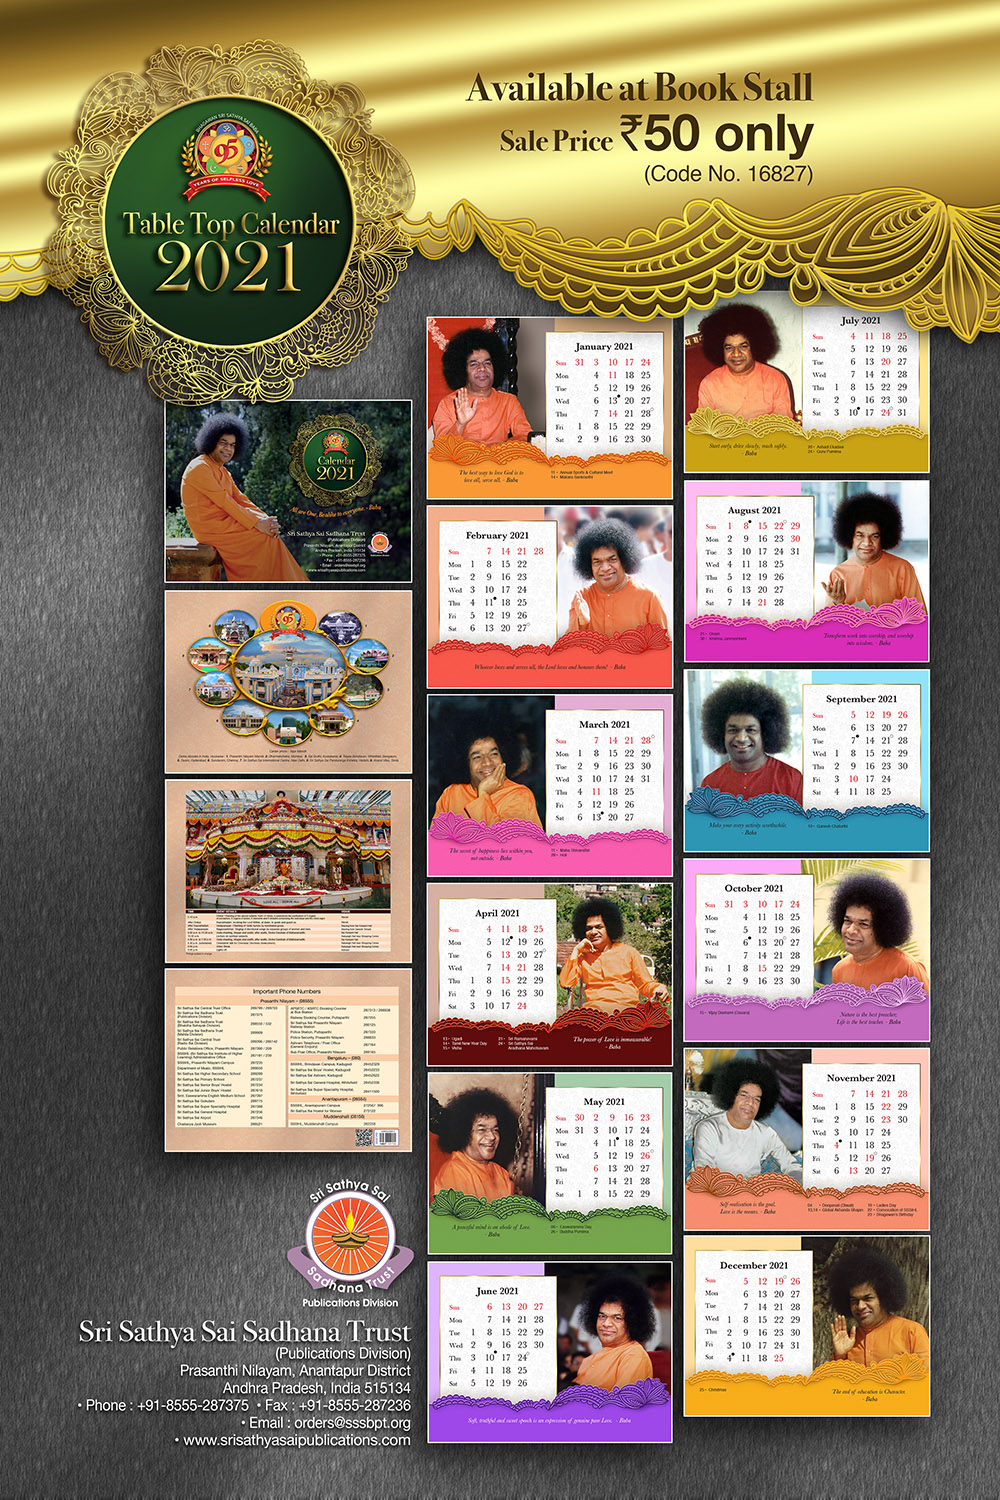 district 91 calendar 2021 Table Calendar 2021 16827 Rs 50 00 Sai Cart The Ecom Of Sri Sathya Sai Books Publication Trust district 91 calendar 2021